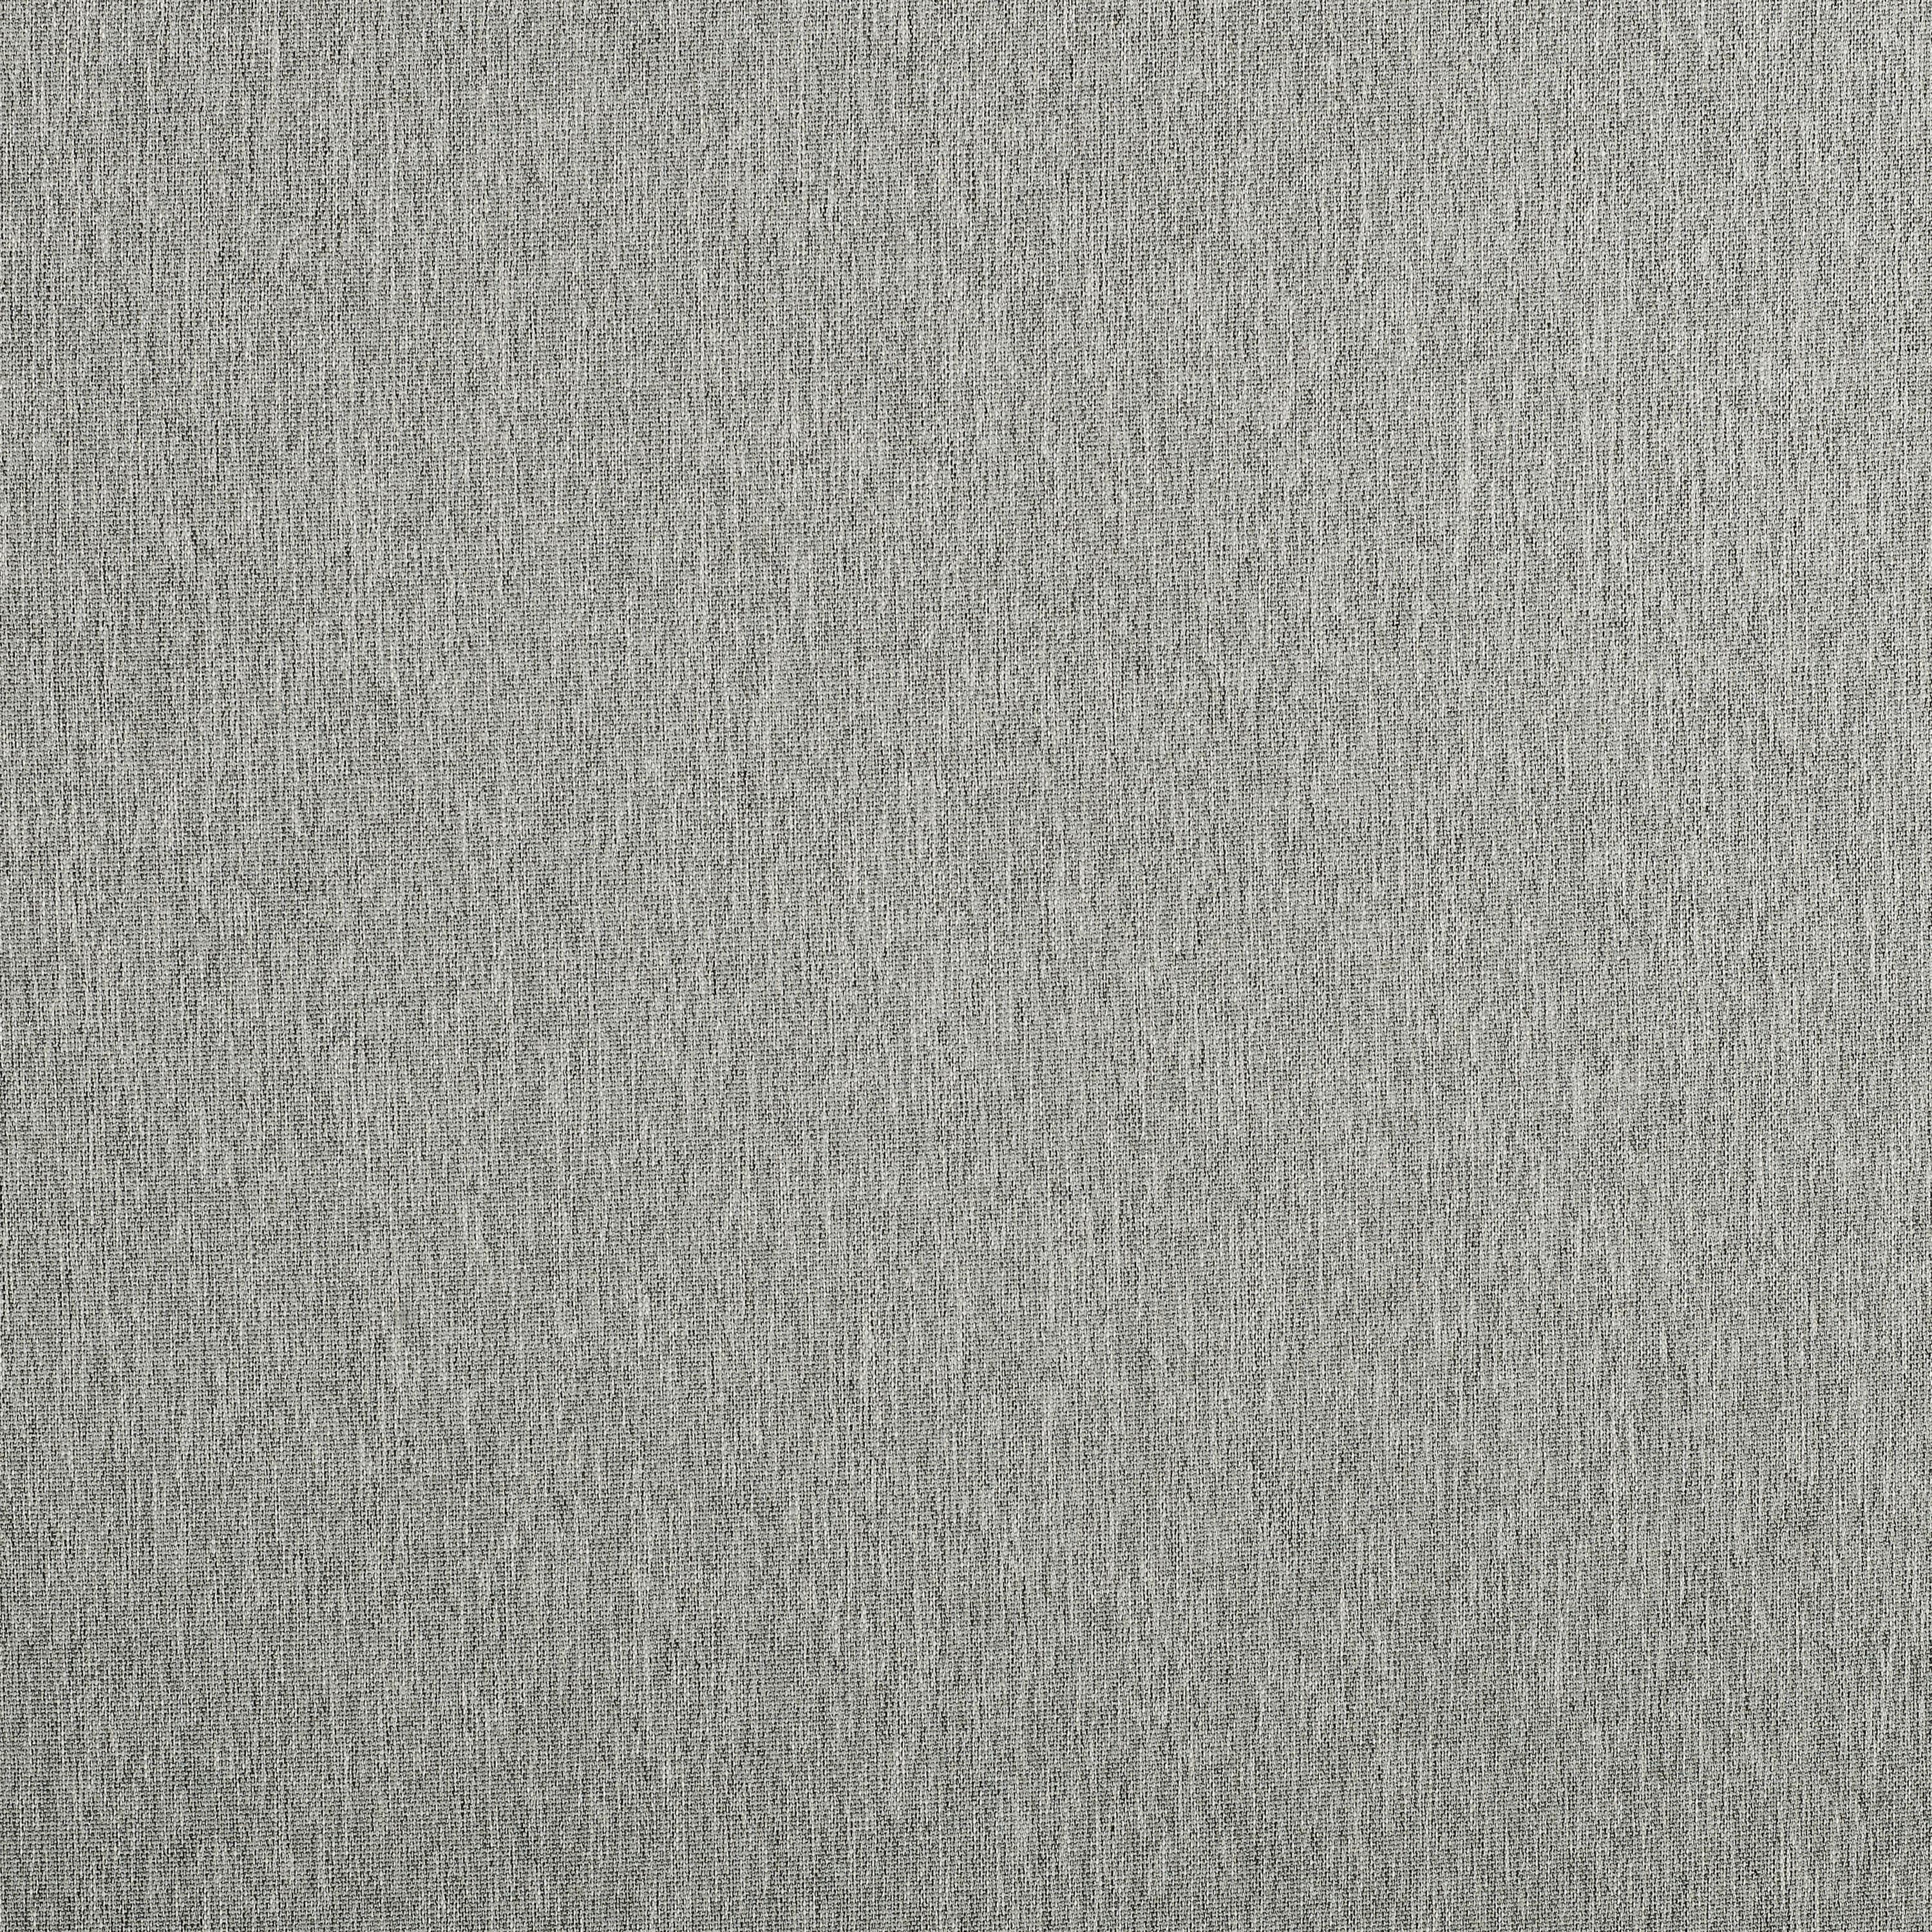 Crosley Bradenton 3 Piece Wicker Patio Sofa Set in Gray - image 2 of 7